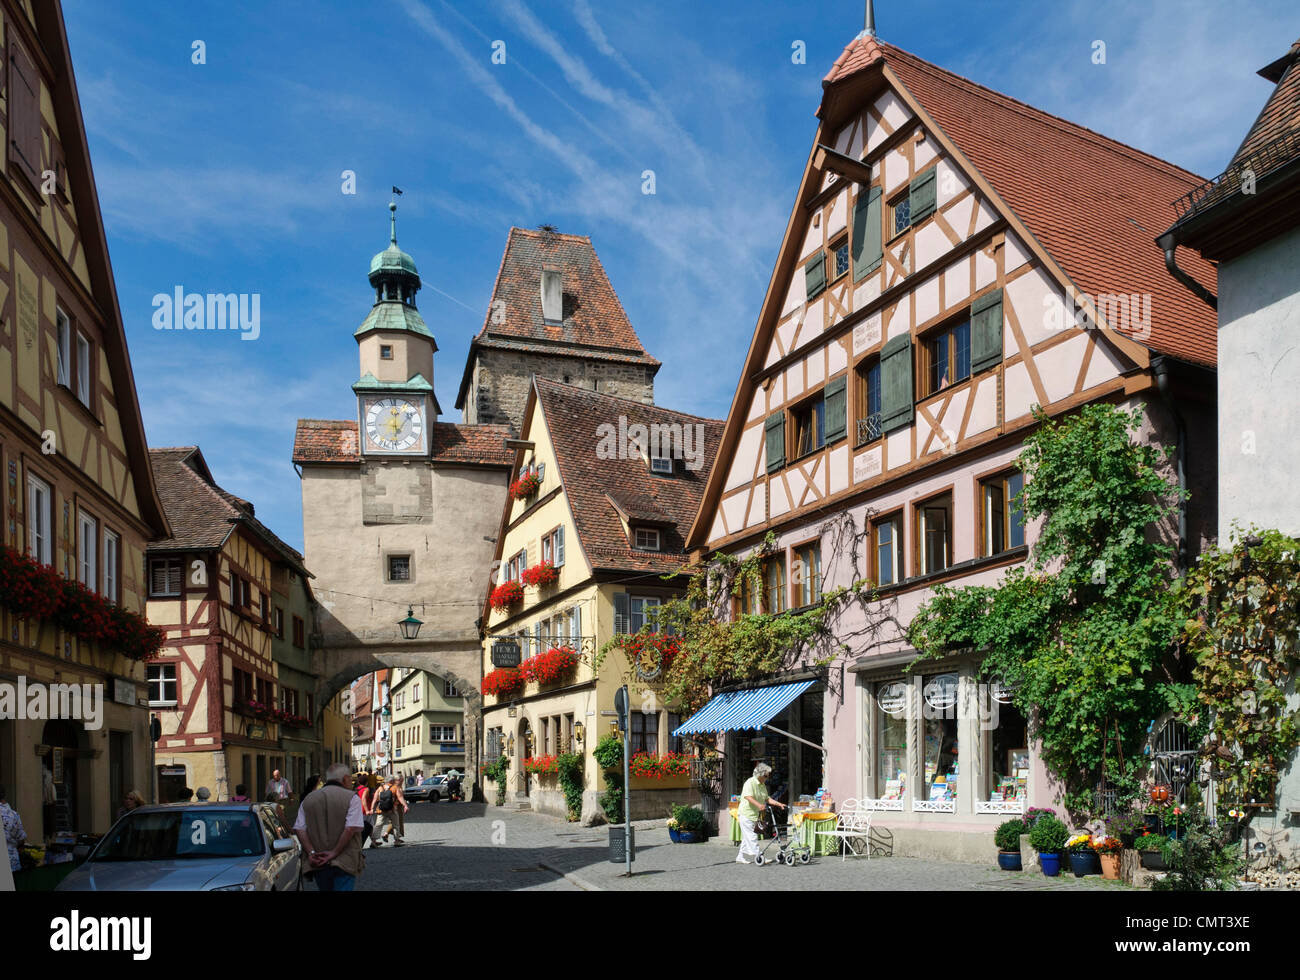 Germania - Rothenburg ob der Tauber, antica città vecchia in Baviera Foto Stock